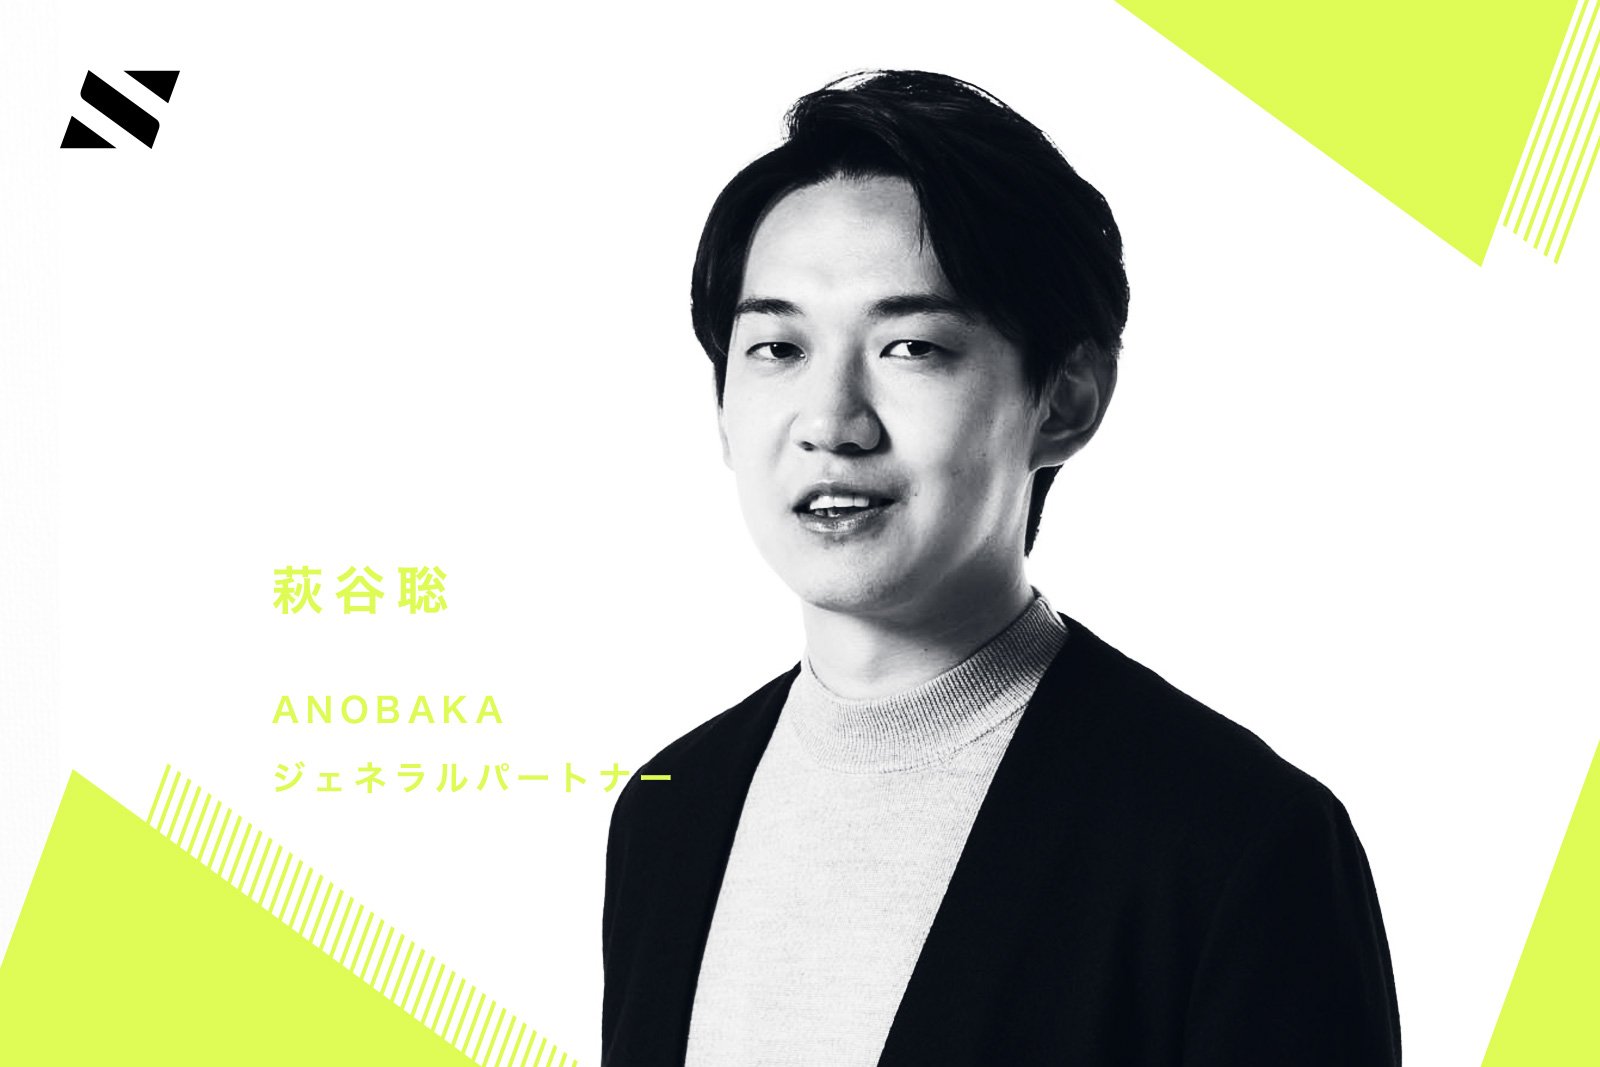 【ANOBAKA 萩谷氏】アジア圏の投資家マネーの流入、日本進出に向けた国内スタートアップ買収の可能性も